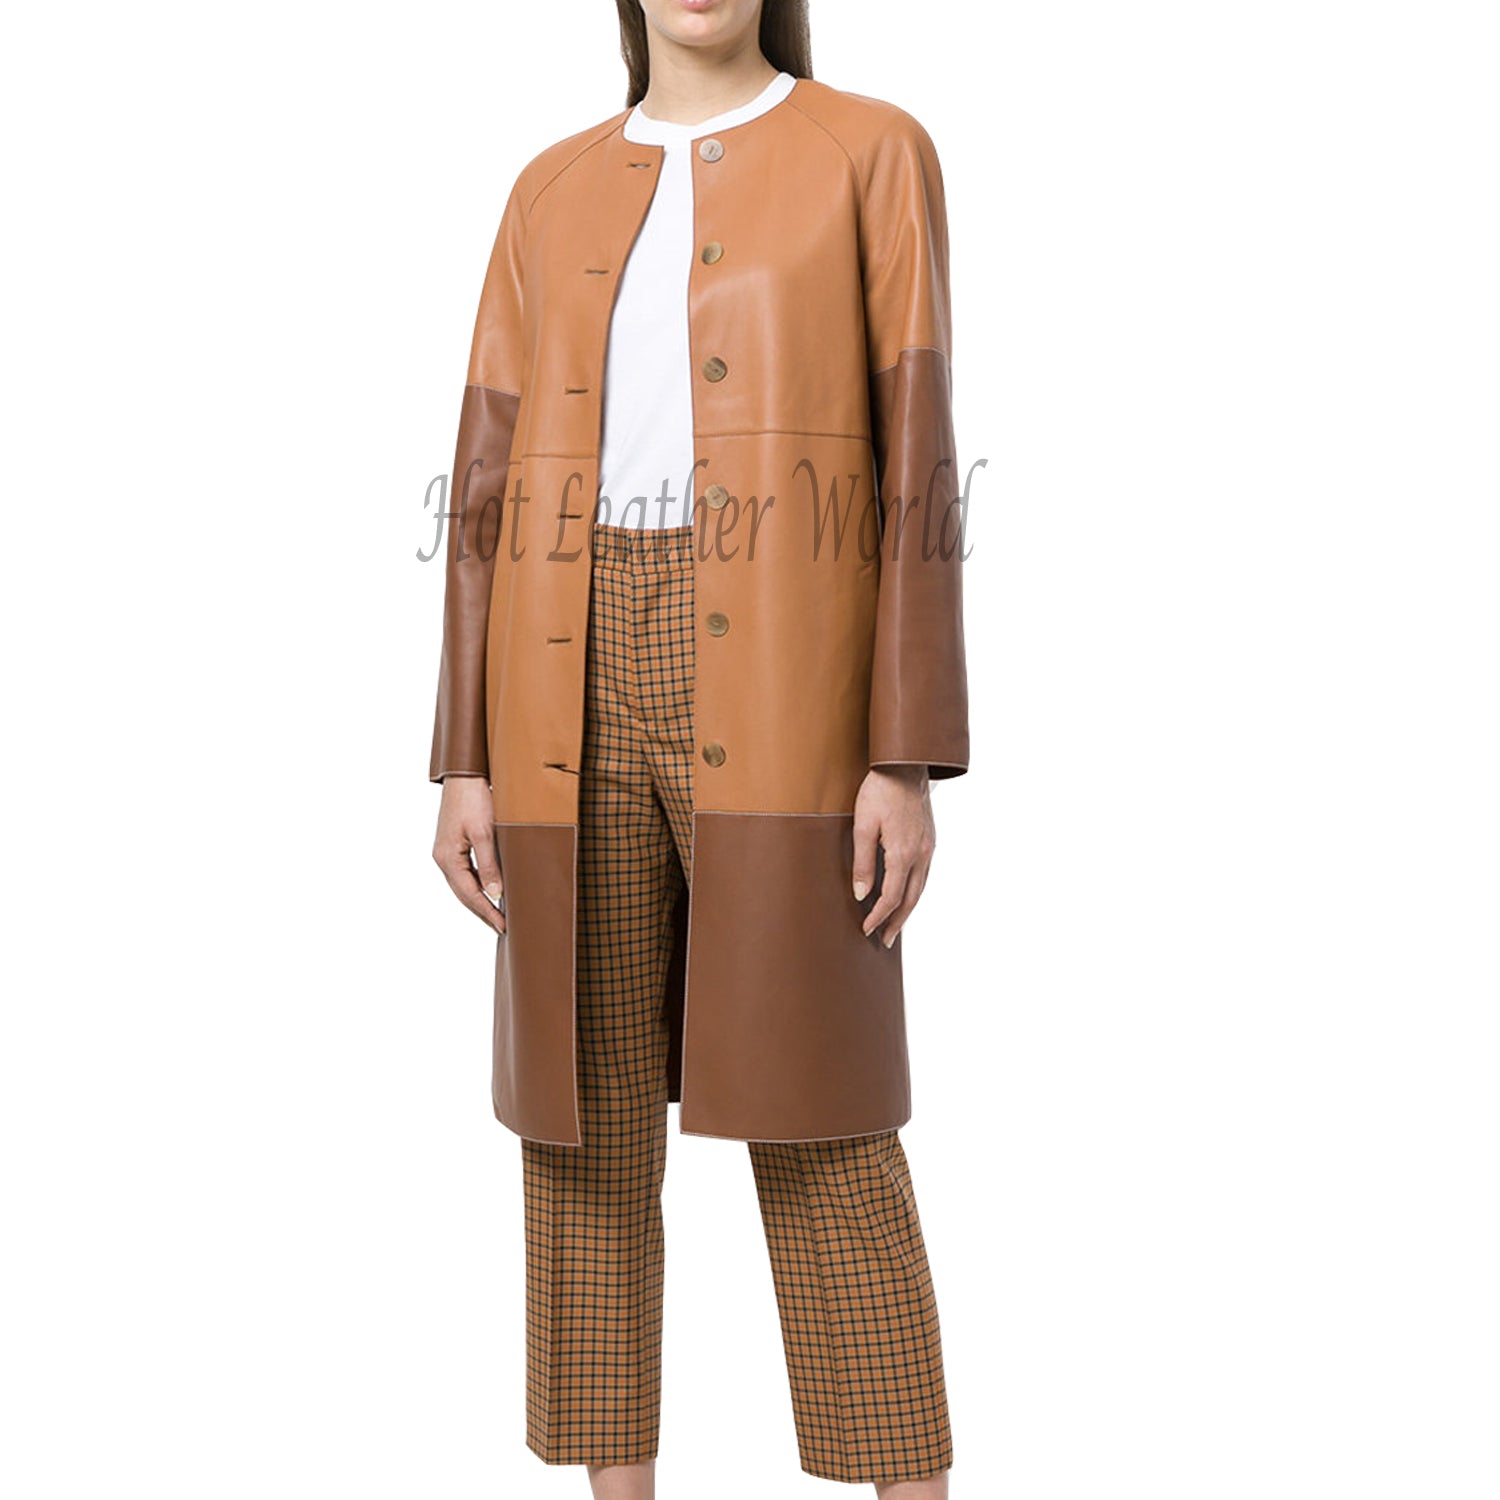 Dual Tone Women Leather Coat -  HOTLEATHERWORLD